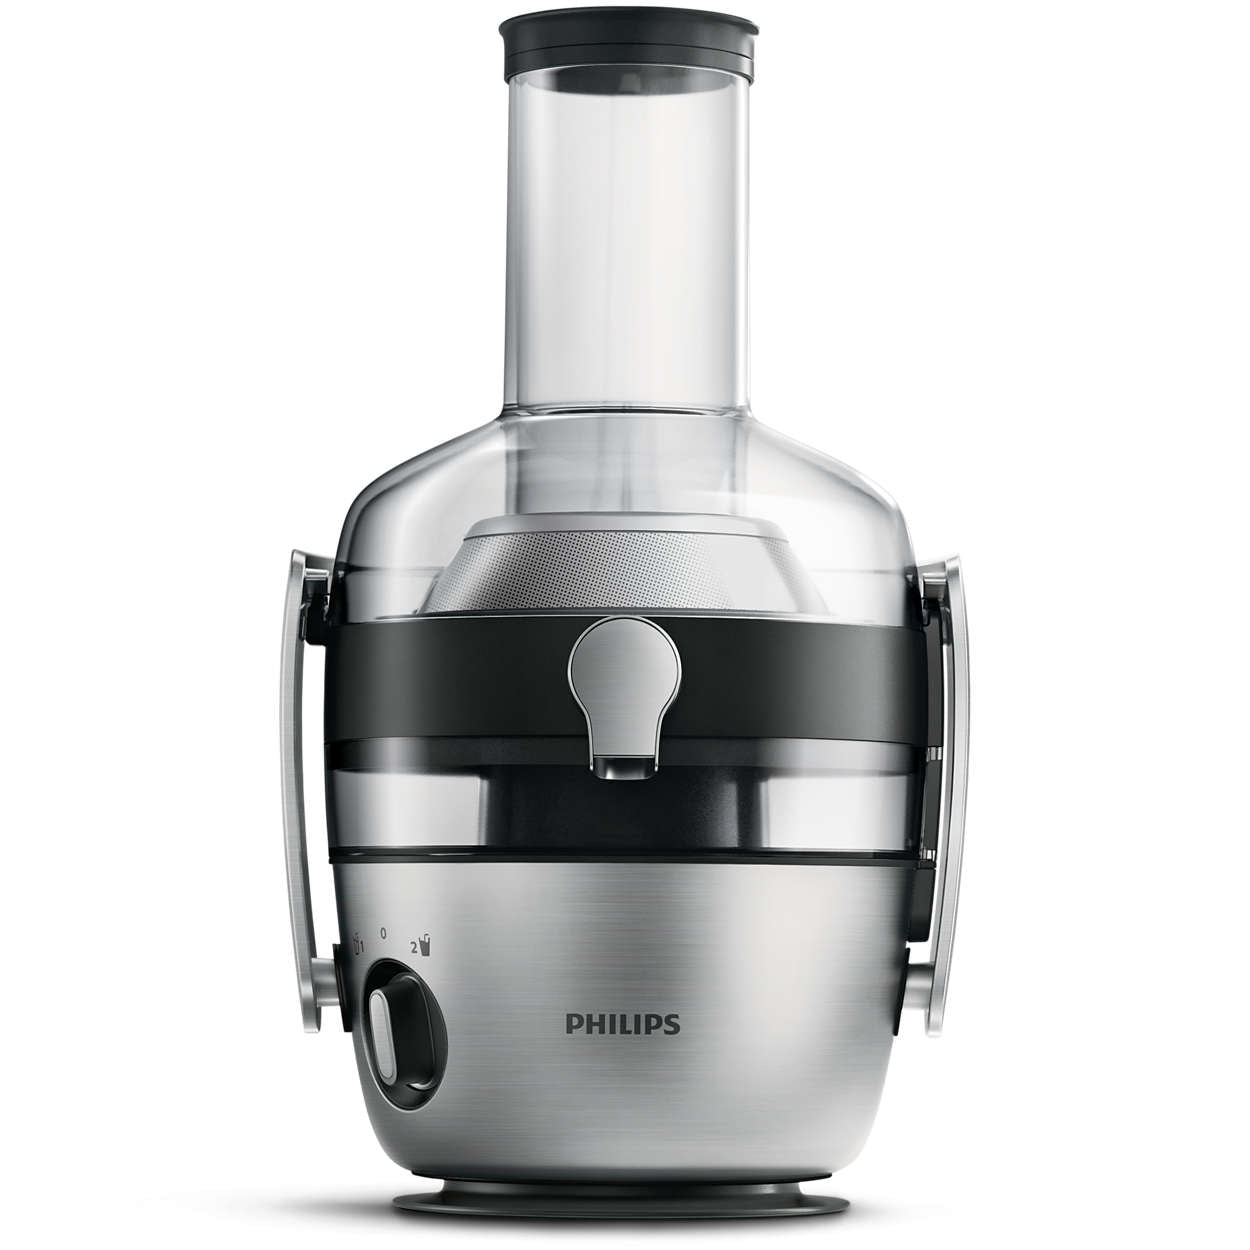 Philips HR1922/01 - Avance Juicer